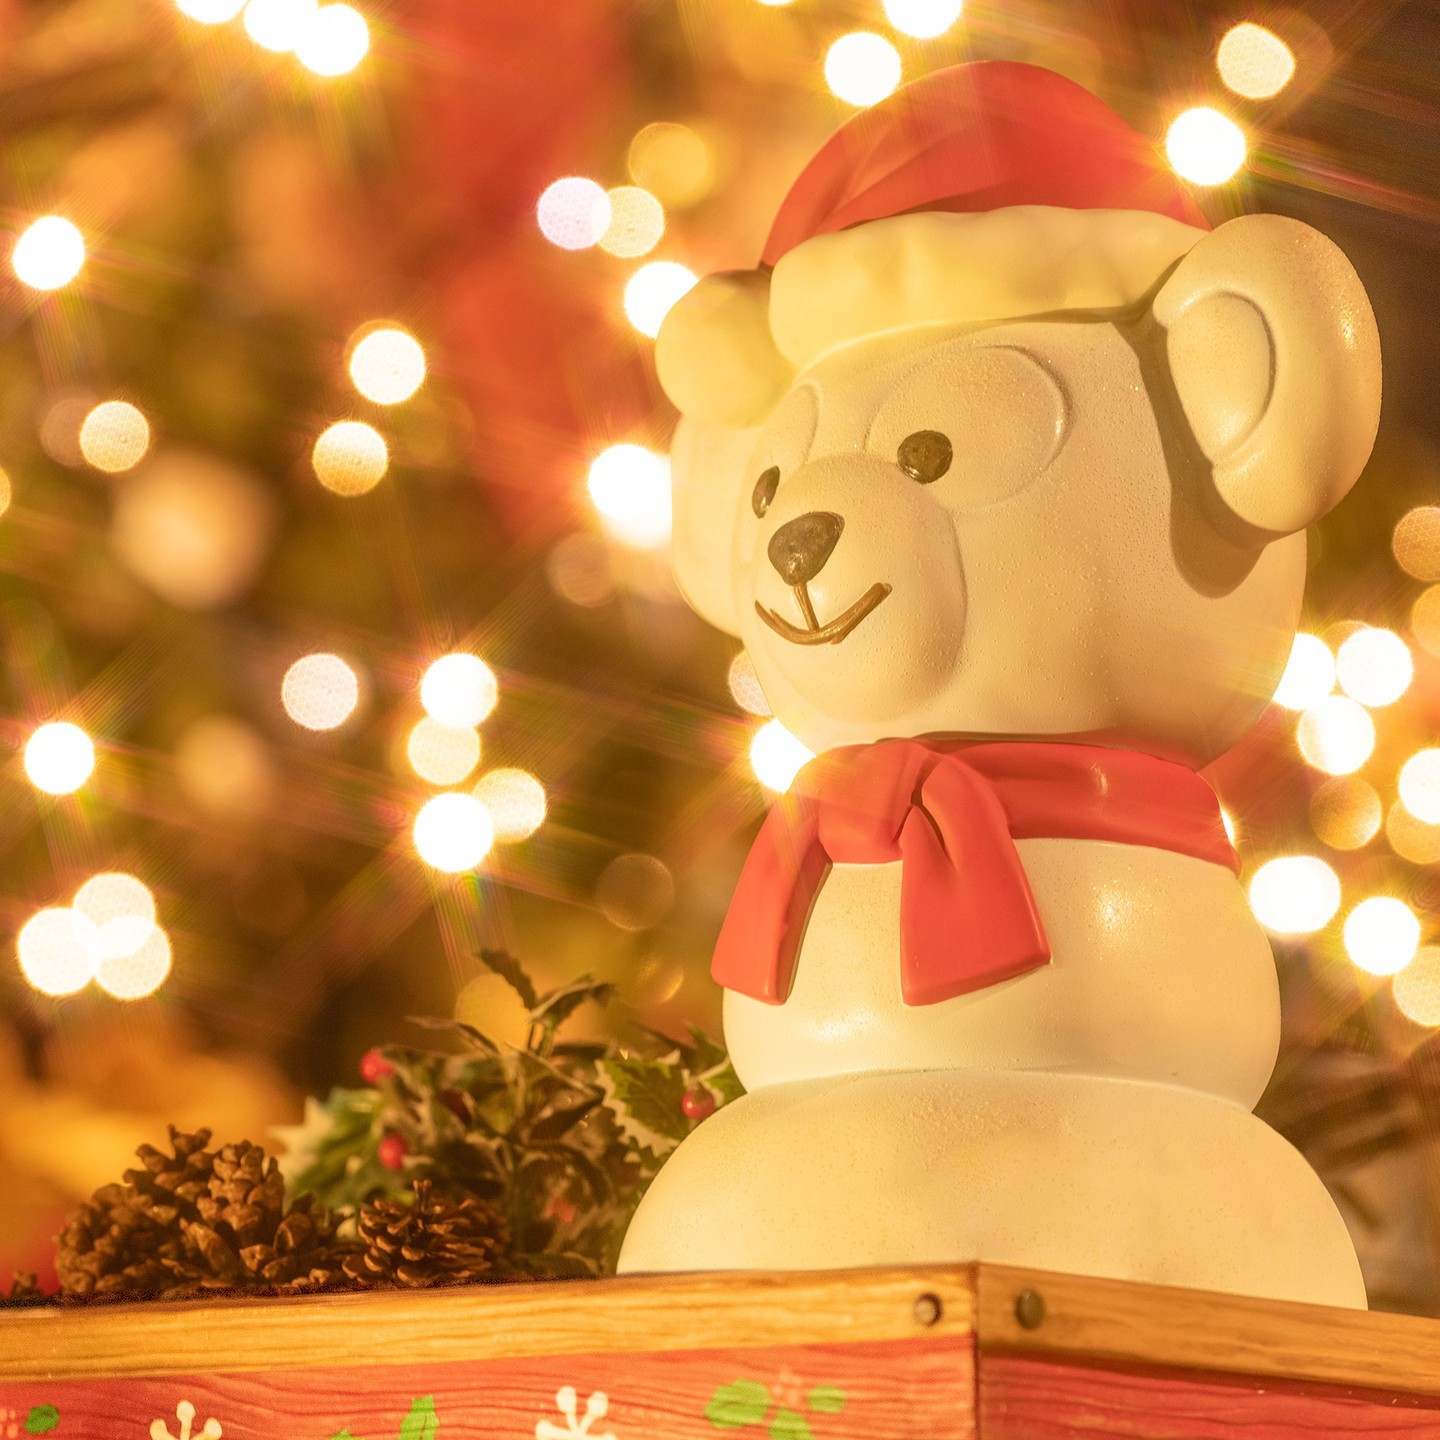 Happy holidays!
素敵なクリスマスを・・・☆
#christmas #duffy #tokyodisneysea #tokyodisneyresort... 이미지